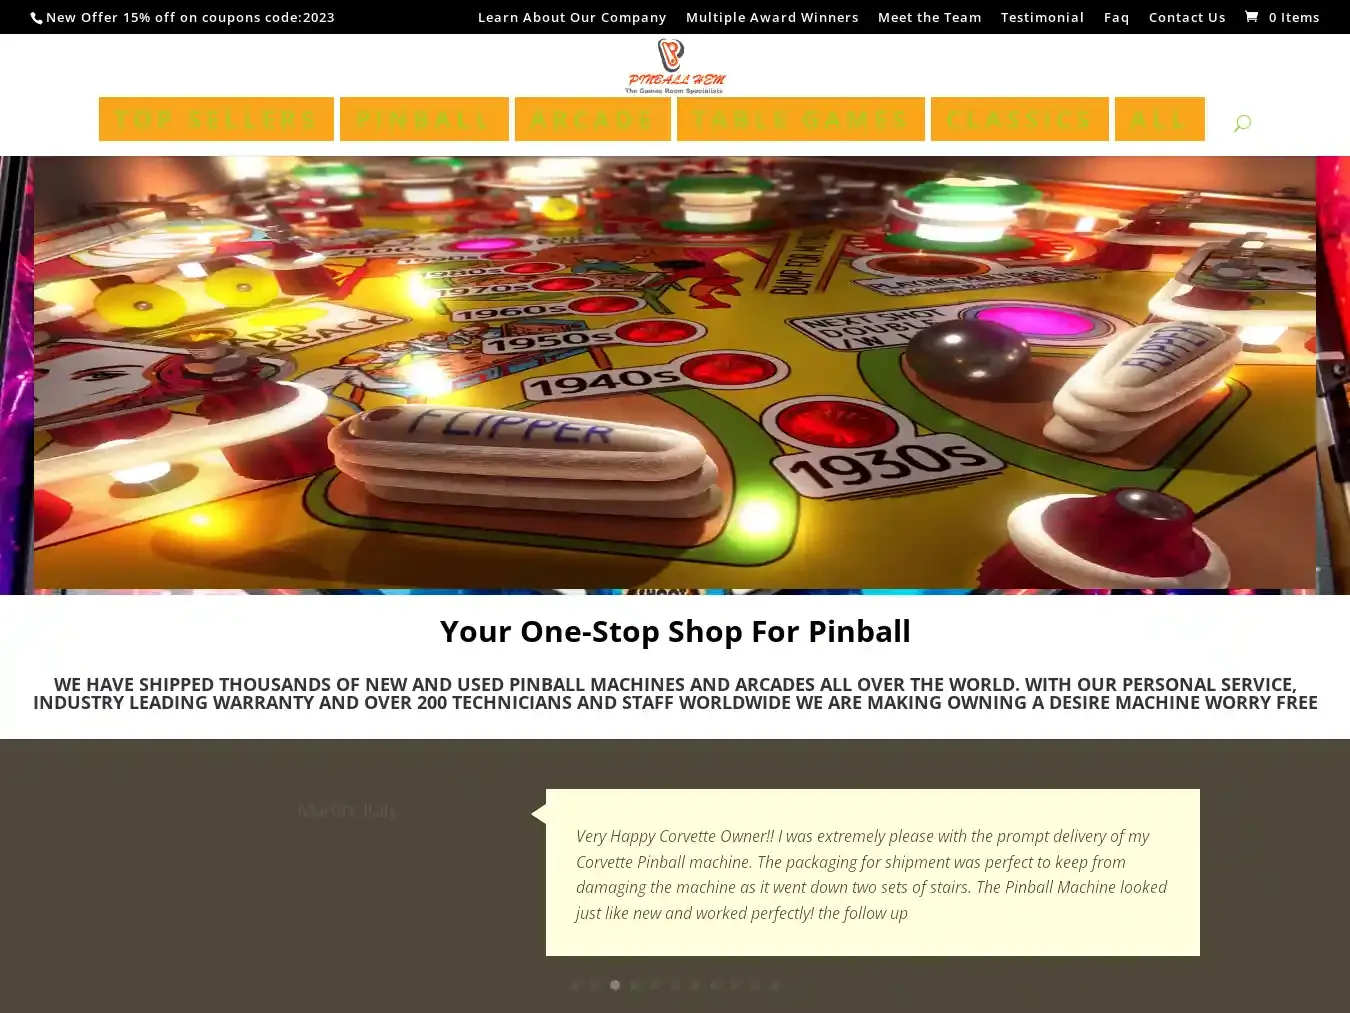 Pinballhem.com Fraudulent Non-Delivery website.